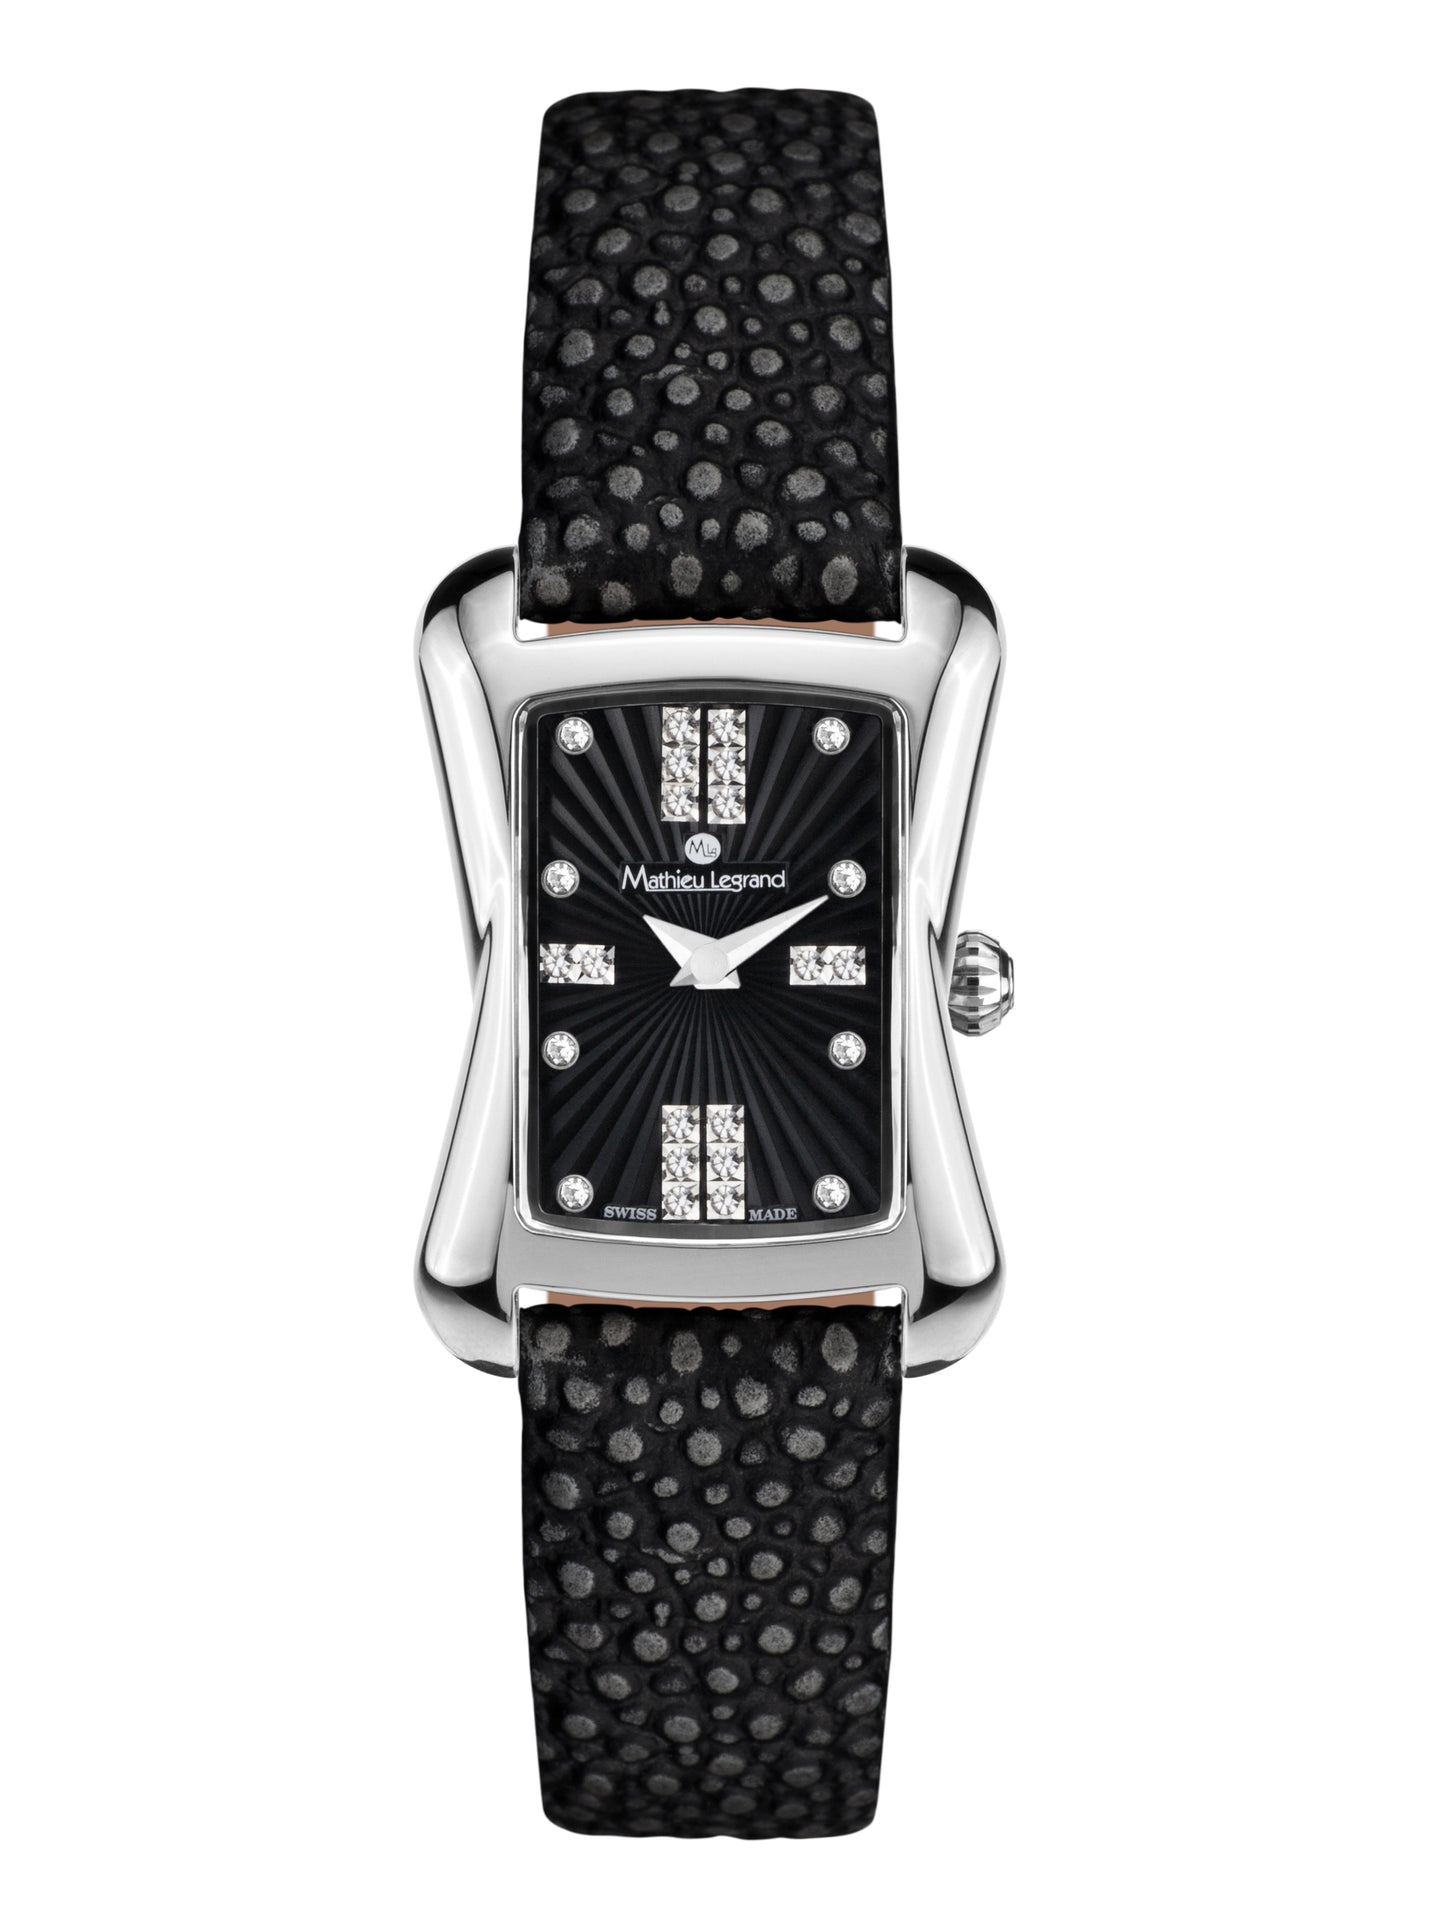 Automatic watches — Papillon — Mathieu Legrand — steel black leather